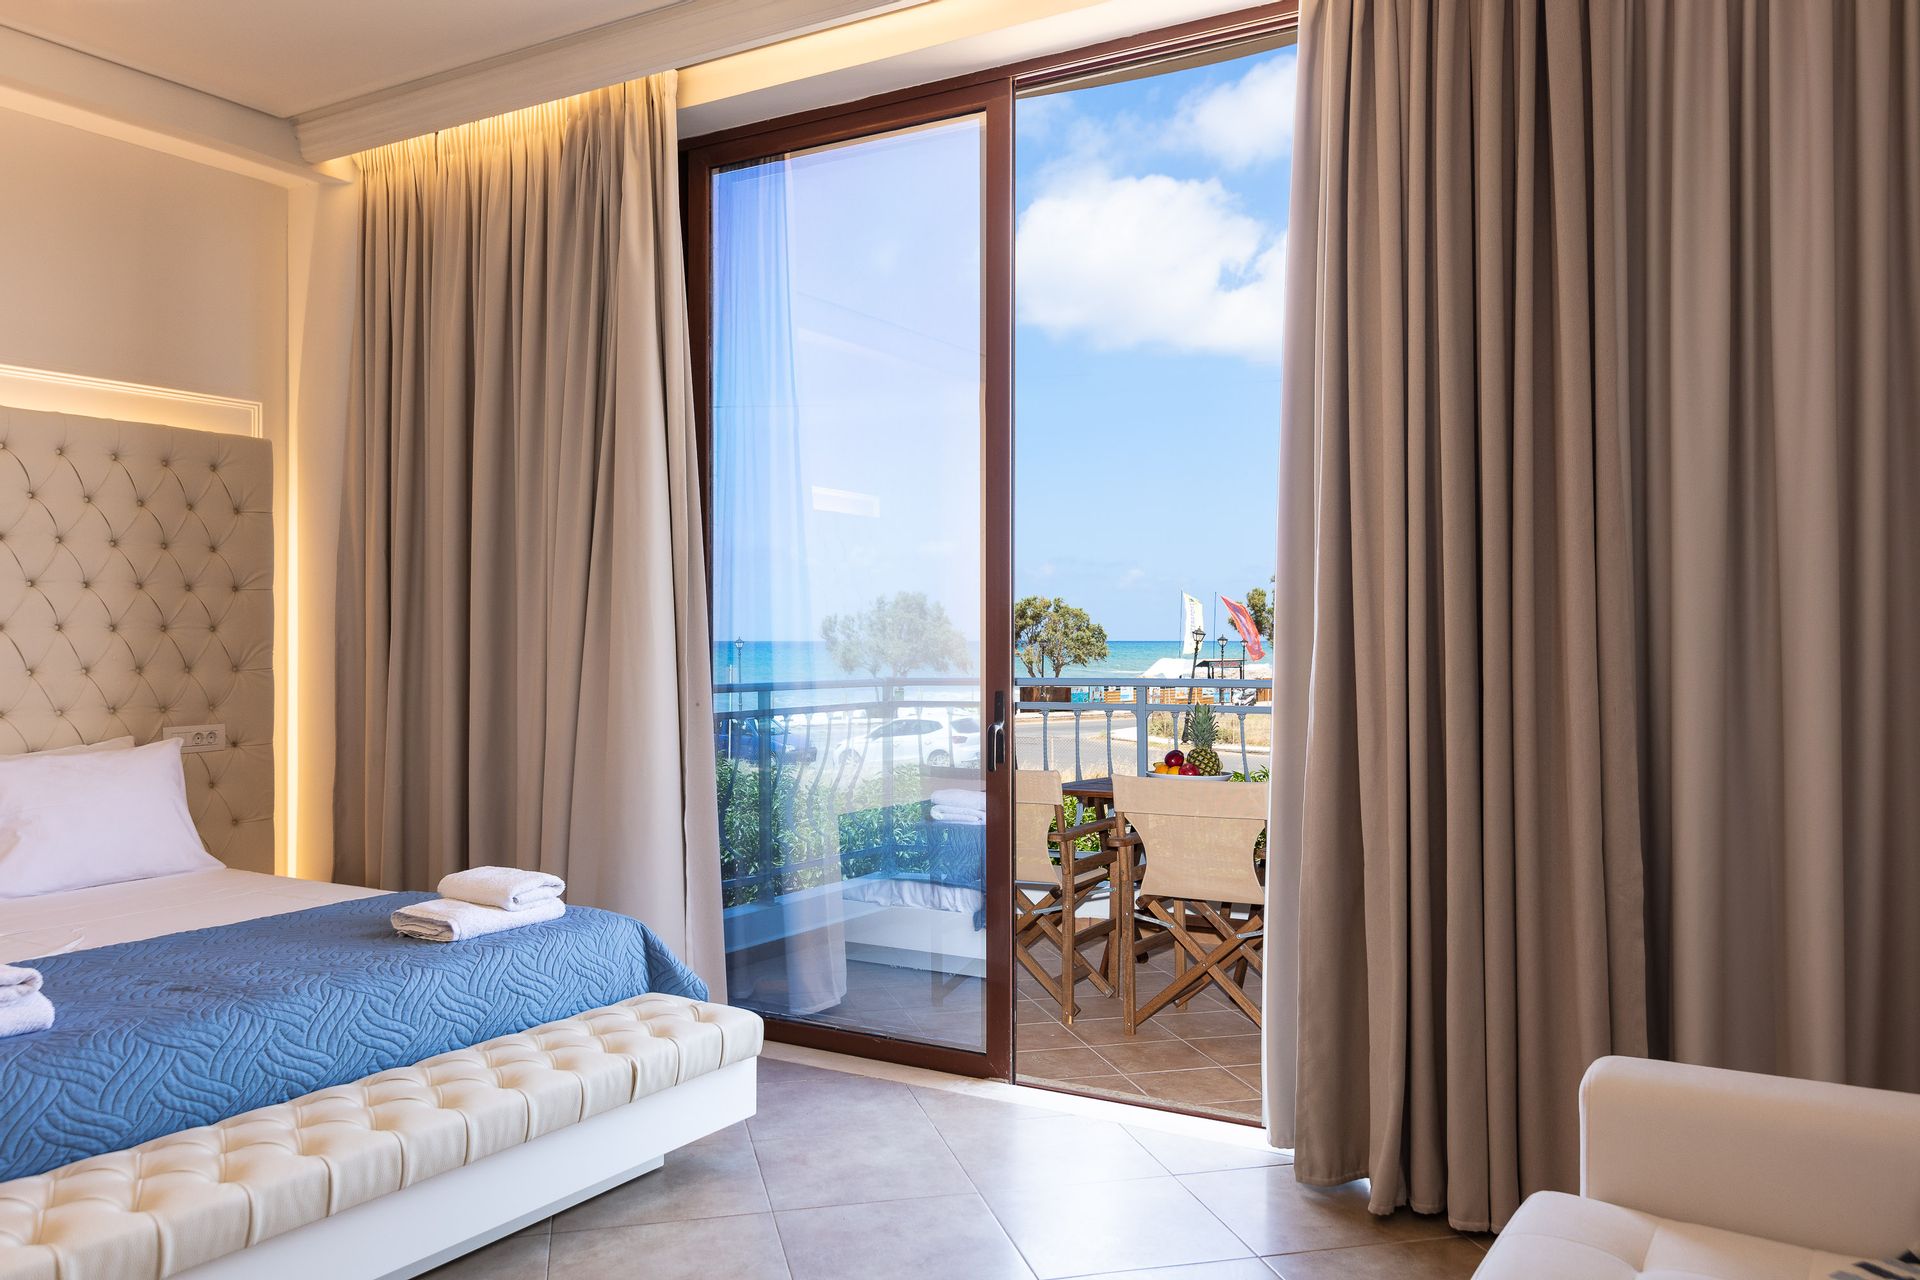 Kahlua Bay Apartments - Ηράκλειο, Κρήτη ✦ 4 Ημέρες